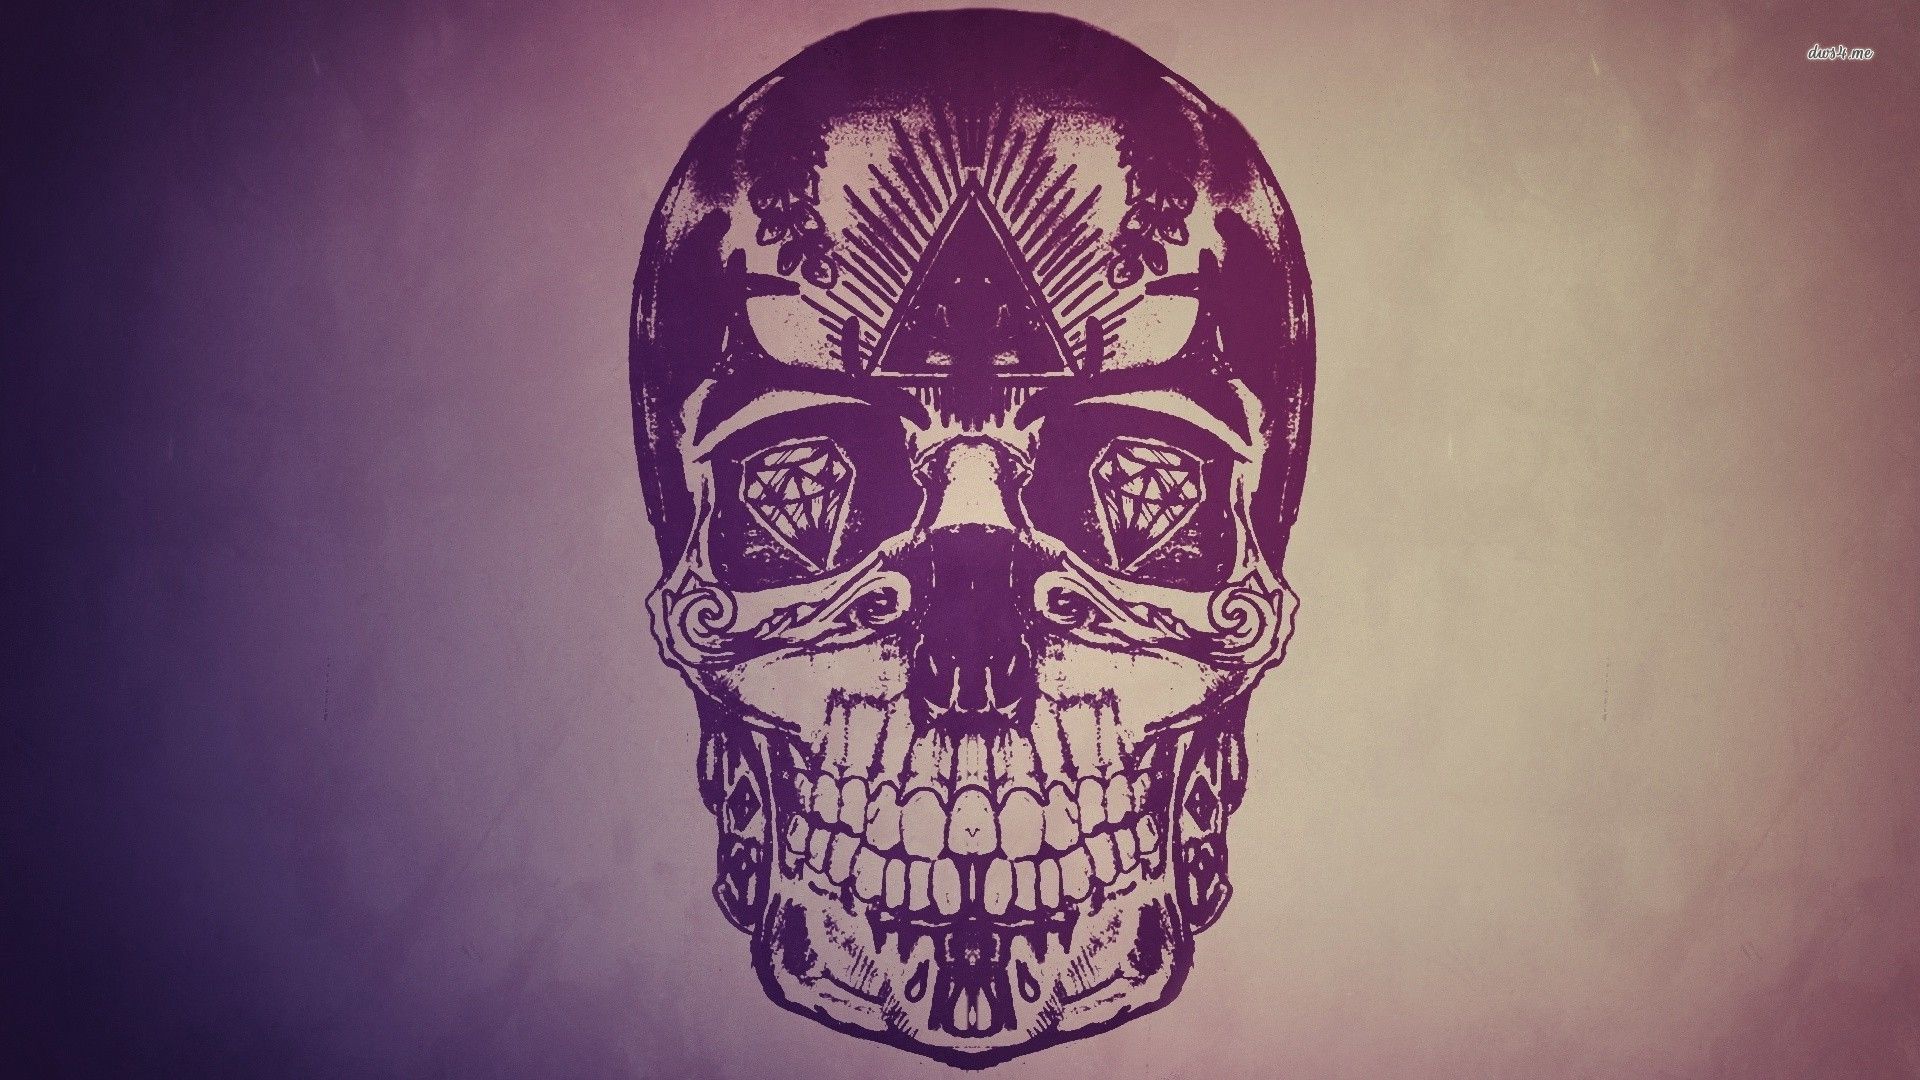 Purple skull with diamond eyes wallpaper - Digital Art wallpapers ...